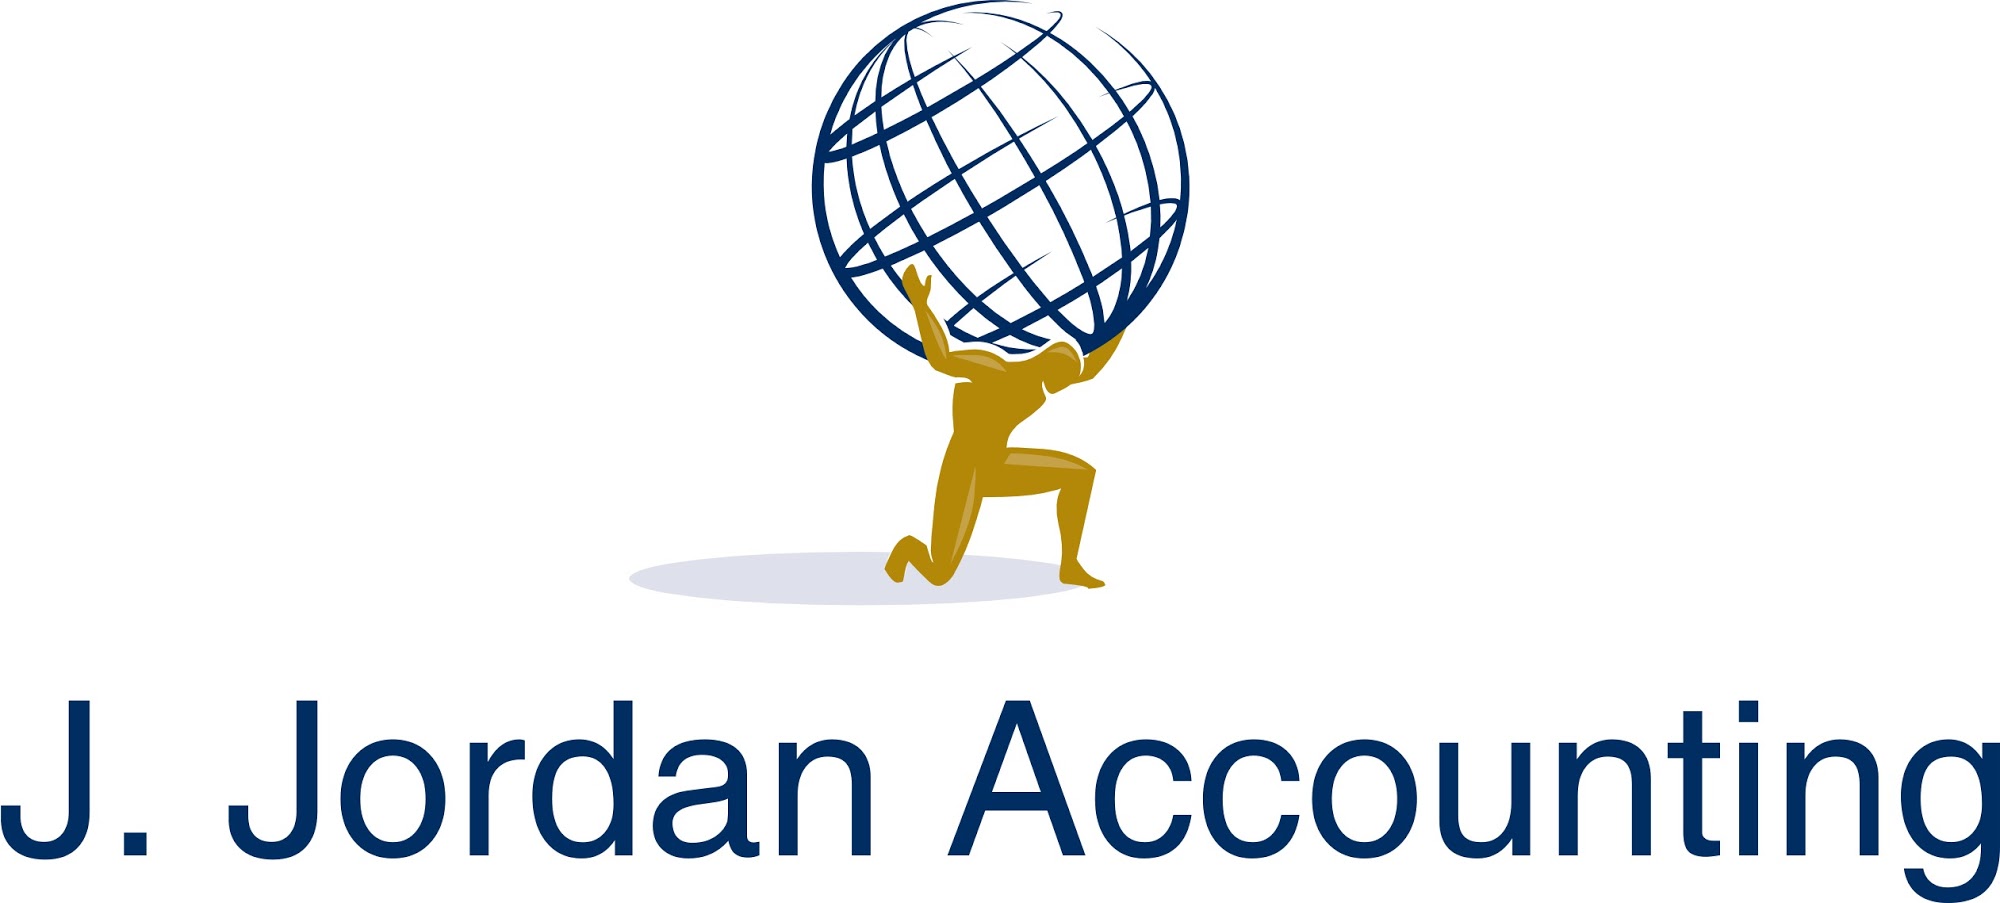 J. Jordan Accounting